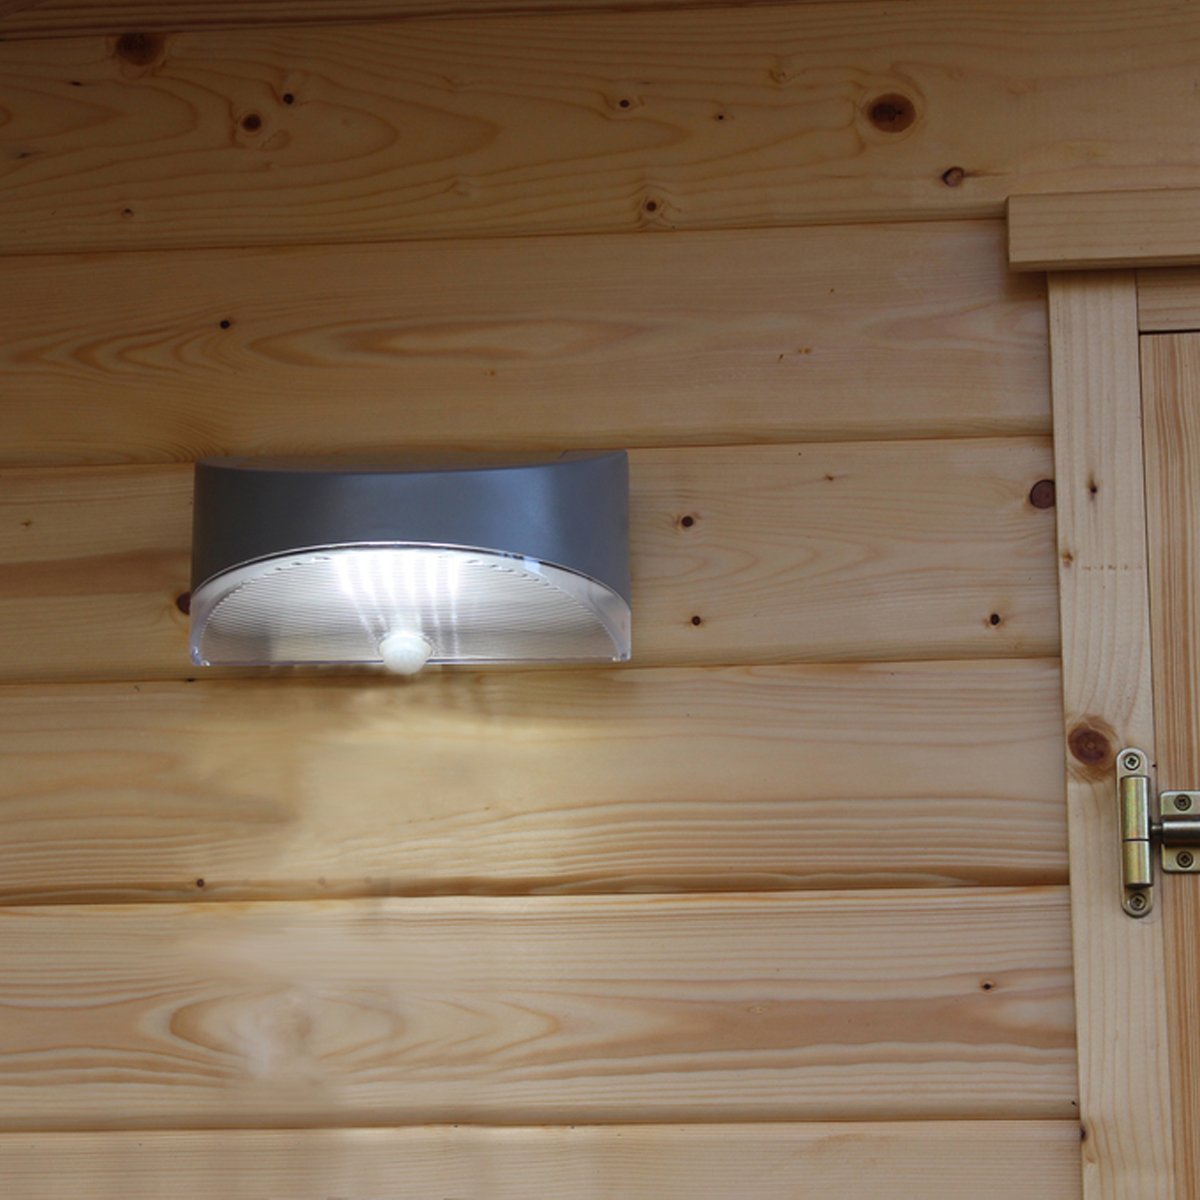 CGC ANITA Grey Solar Outdoor LED Wall Light With Motion Sensor